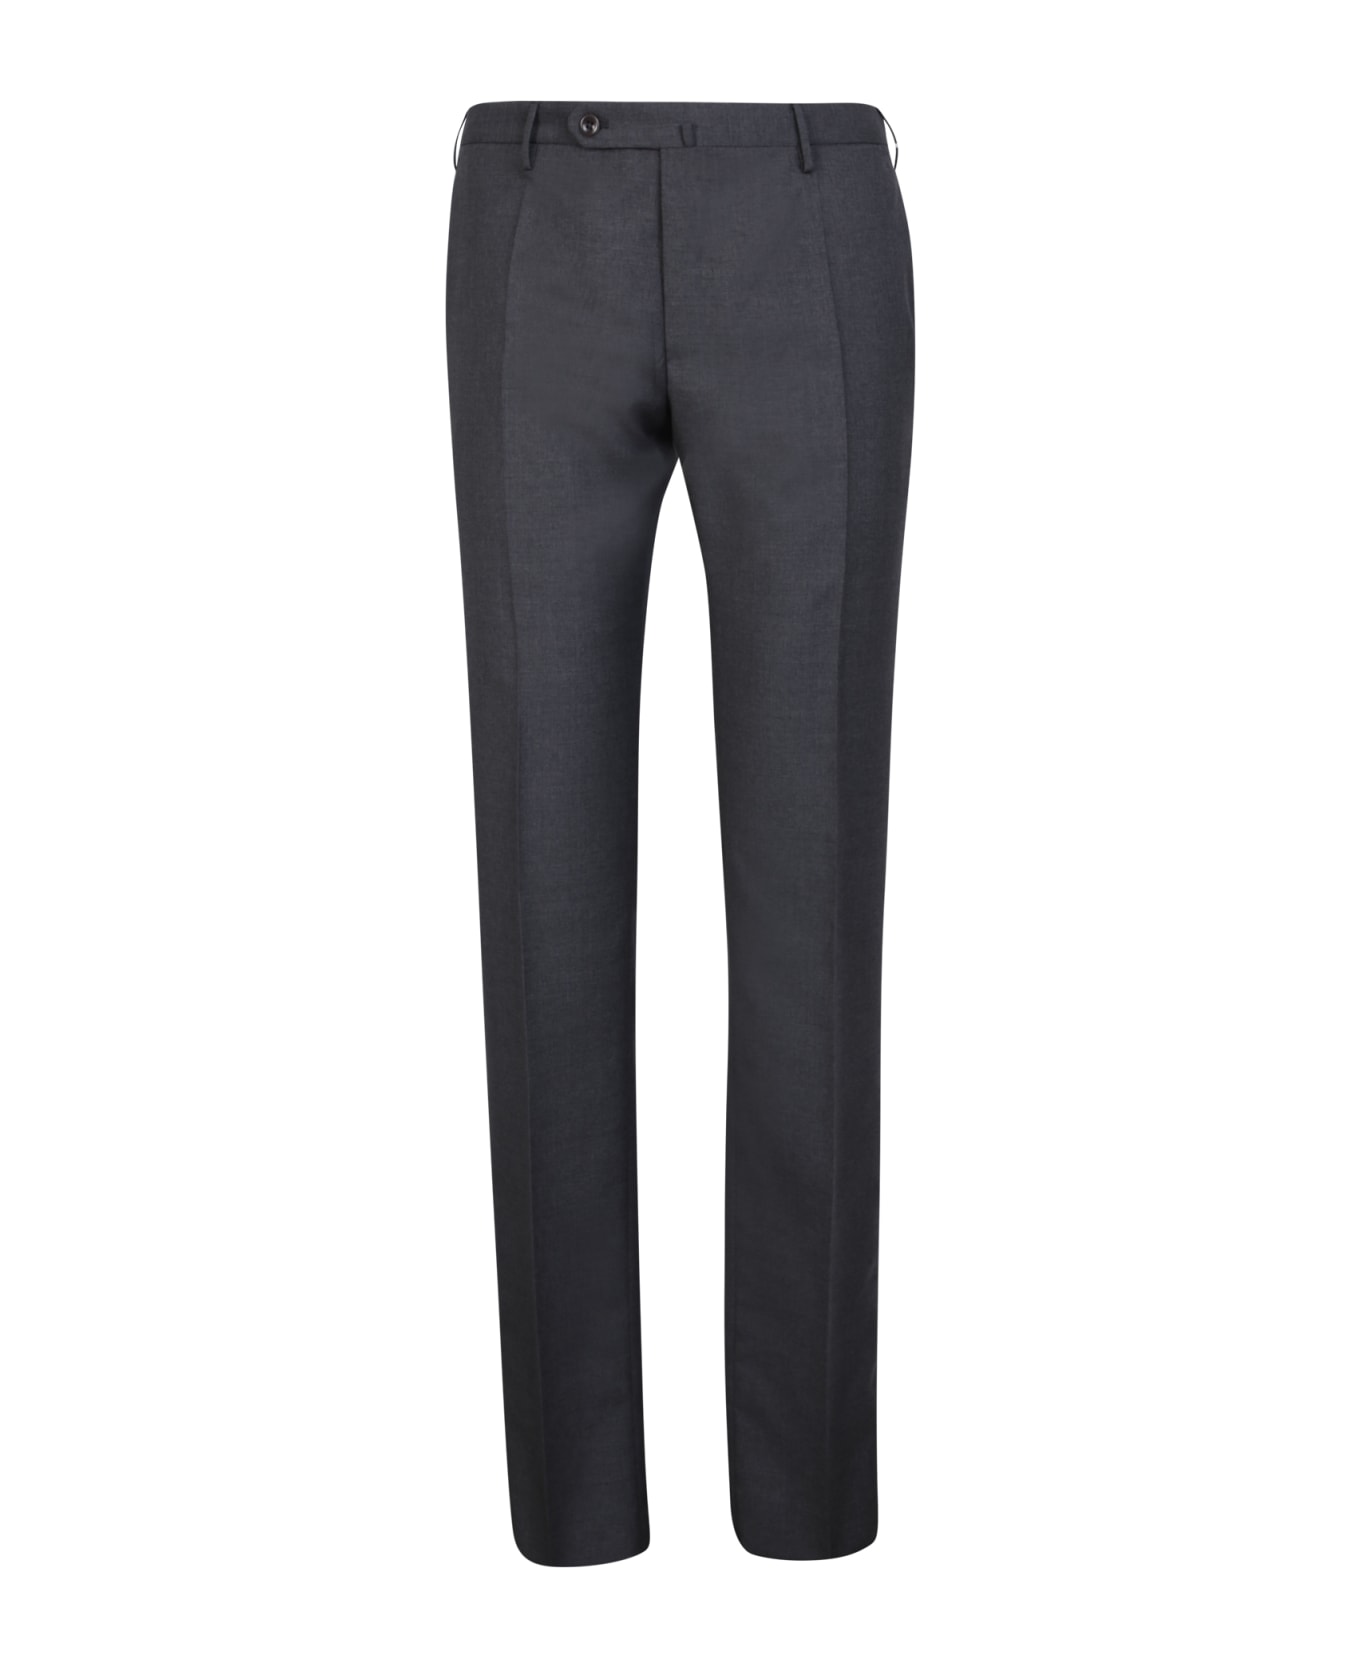 Incotex Grey Slim Fit Trousers - Grey